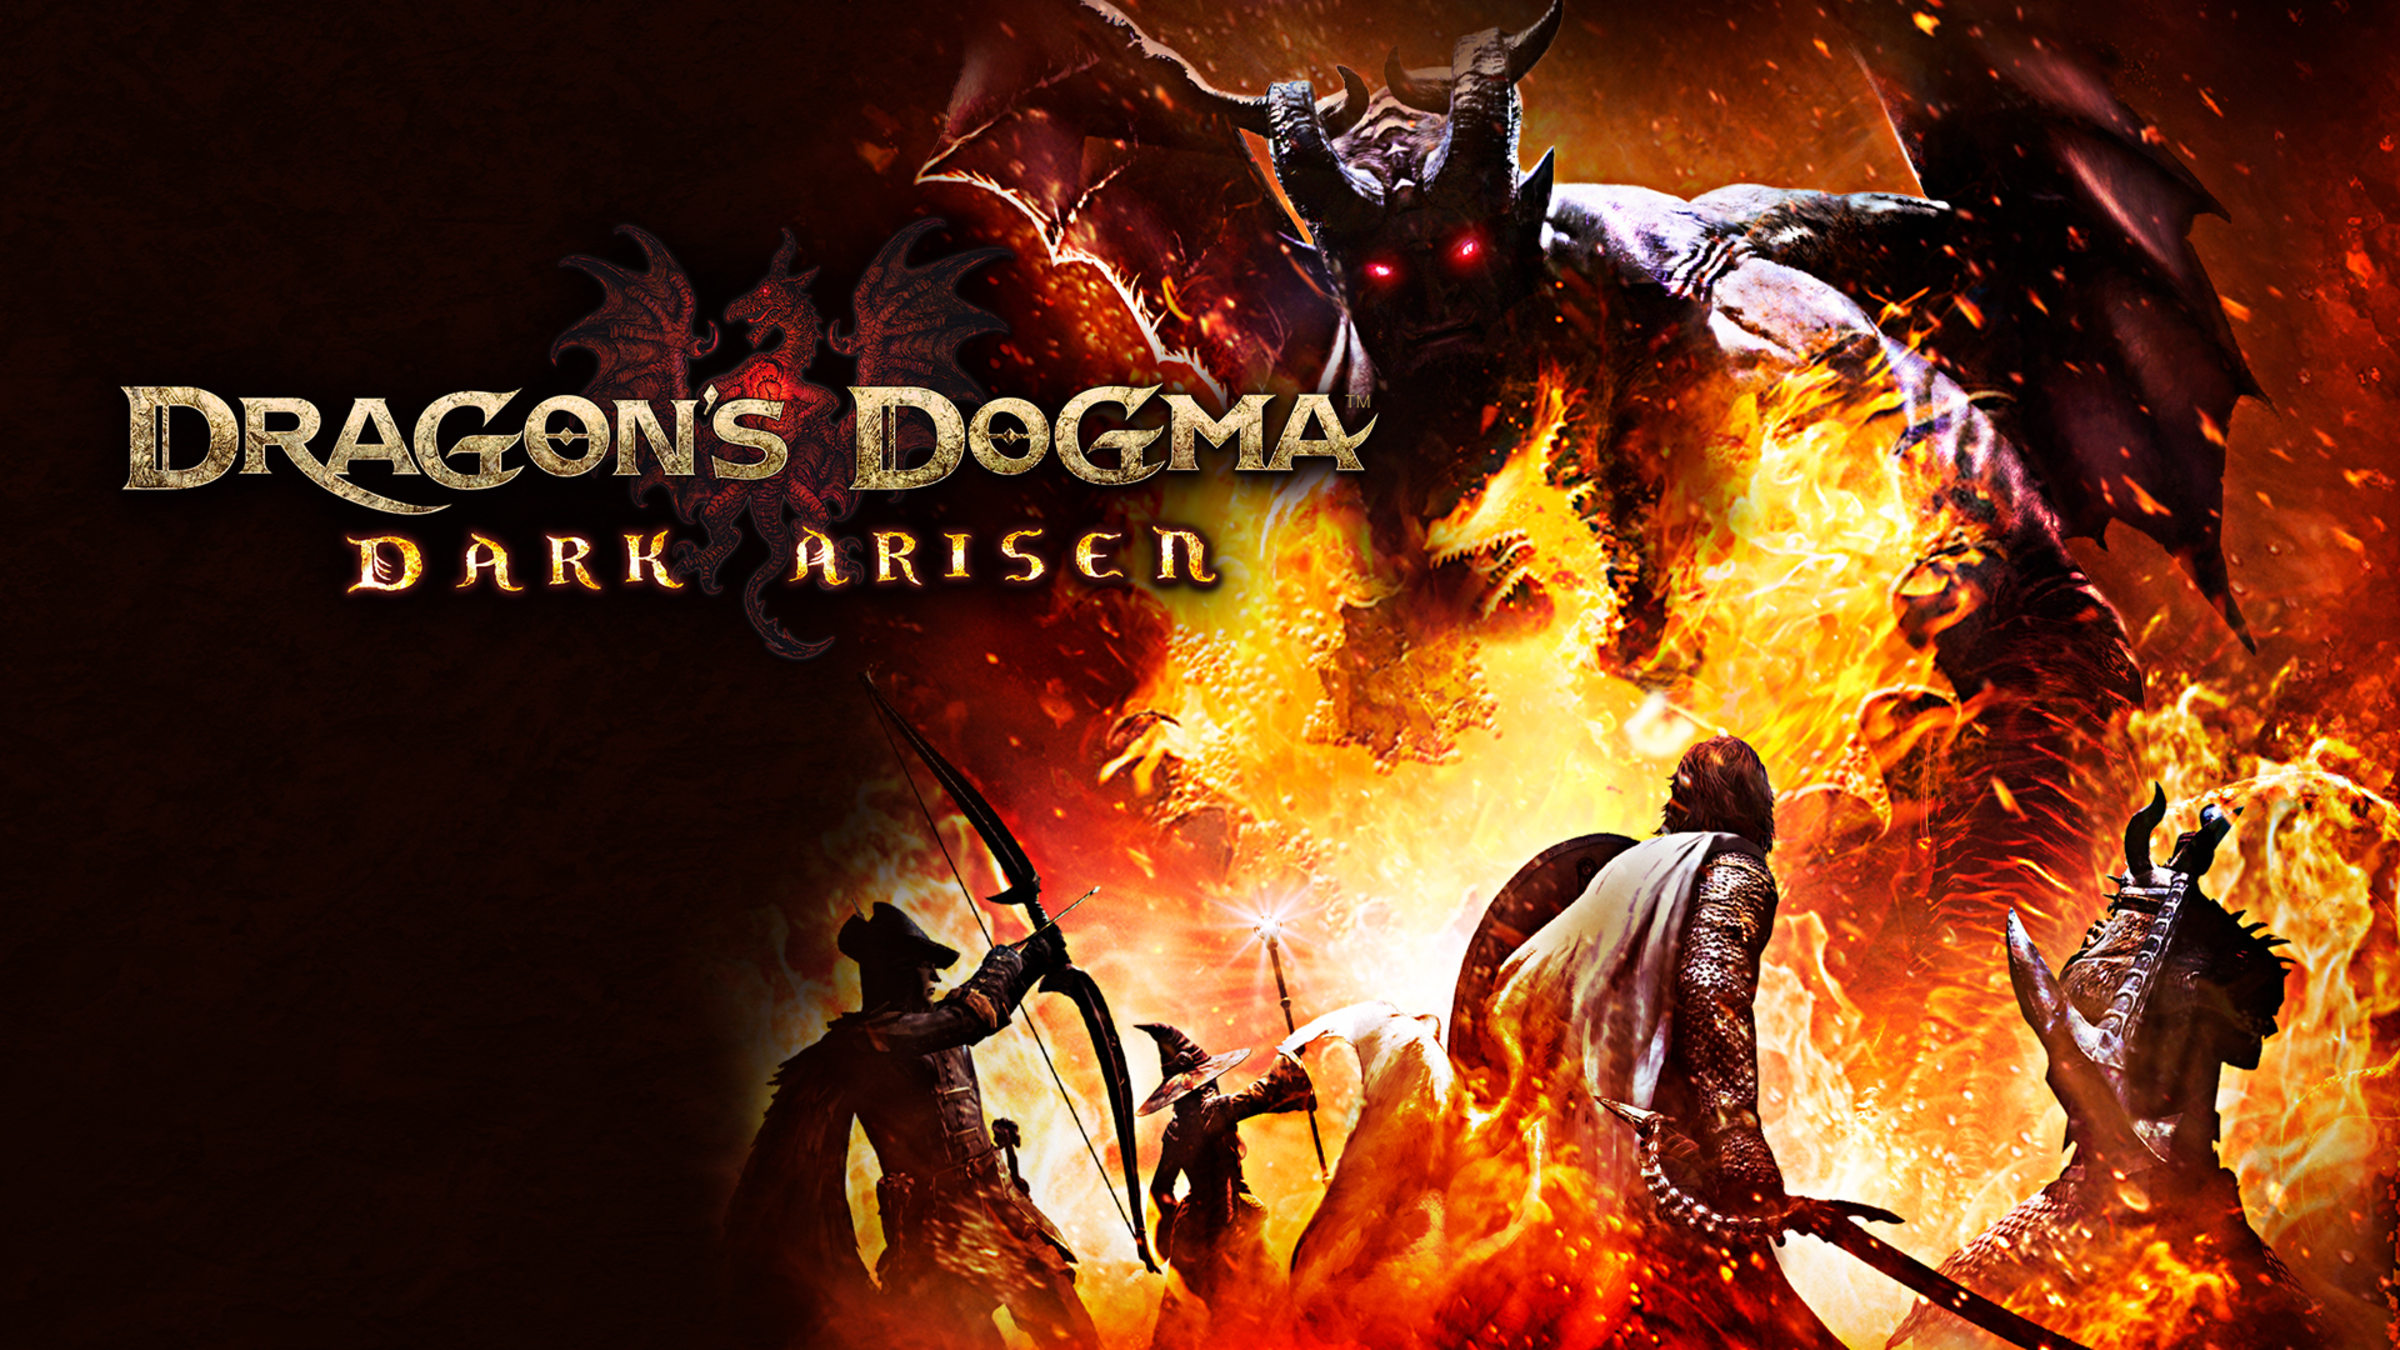 Dragon's Dogma: Dark Arisen (Nintendo Switch Digital Download) $4.99